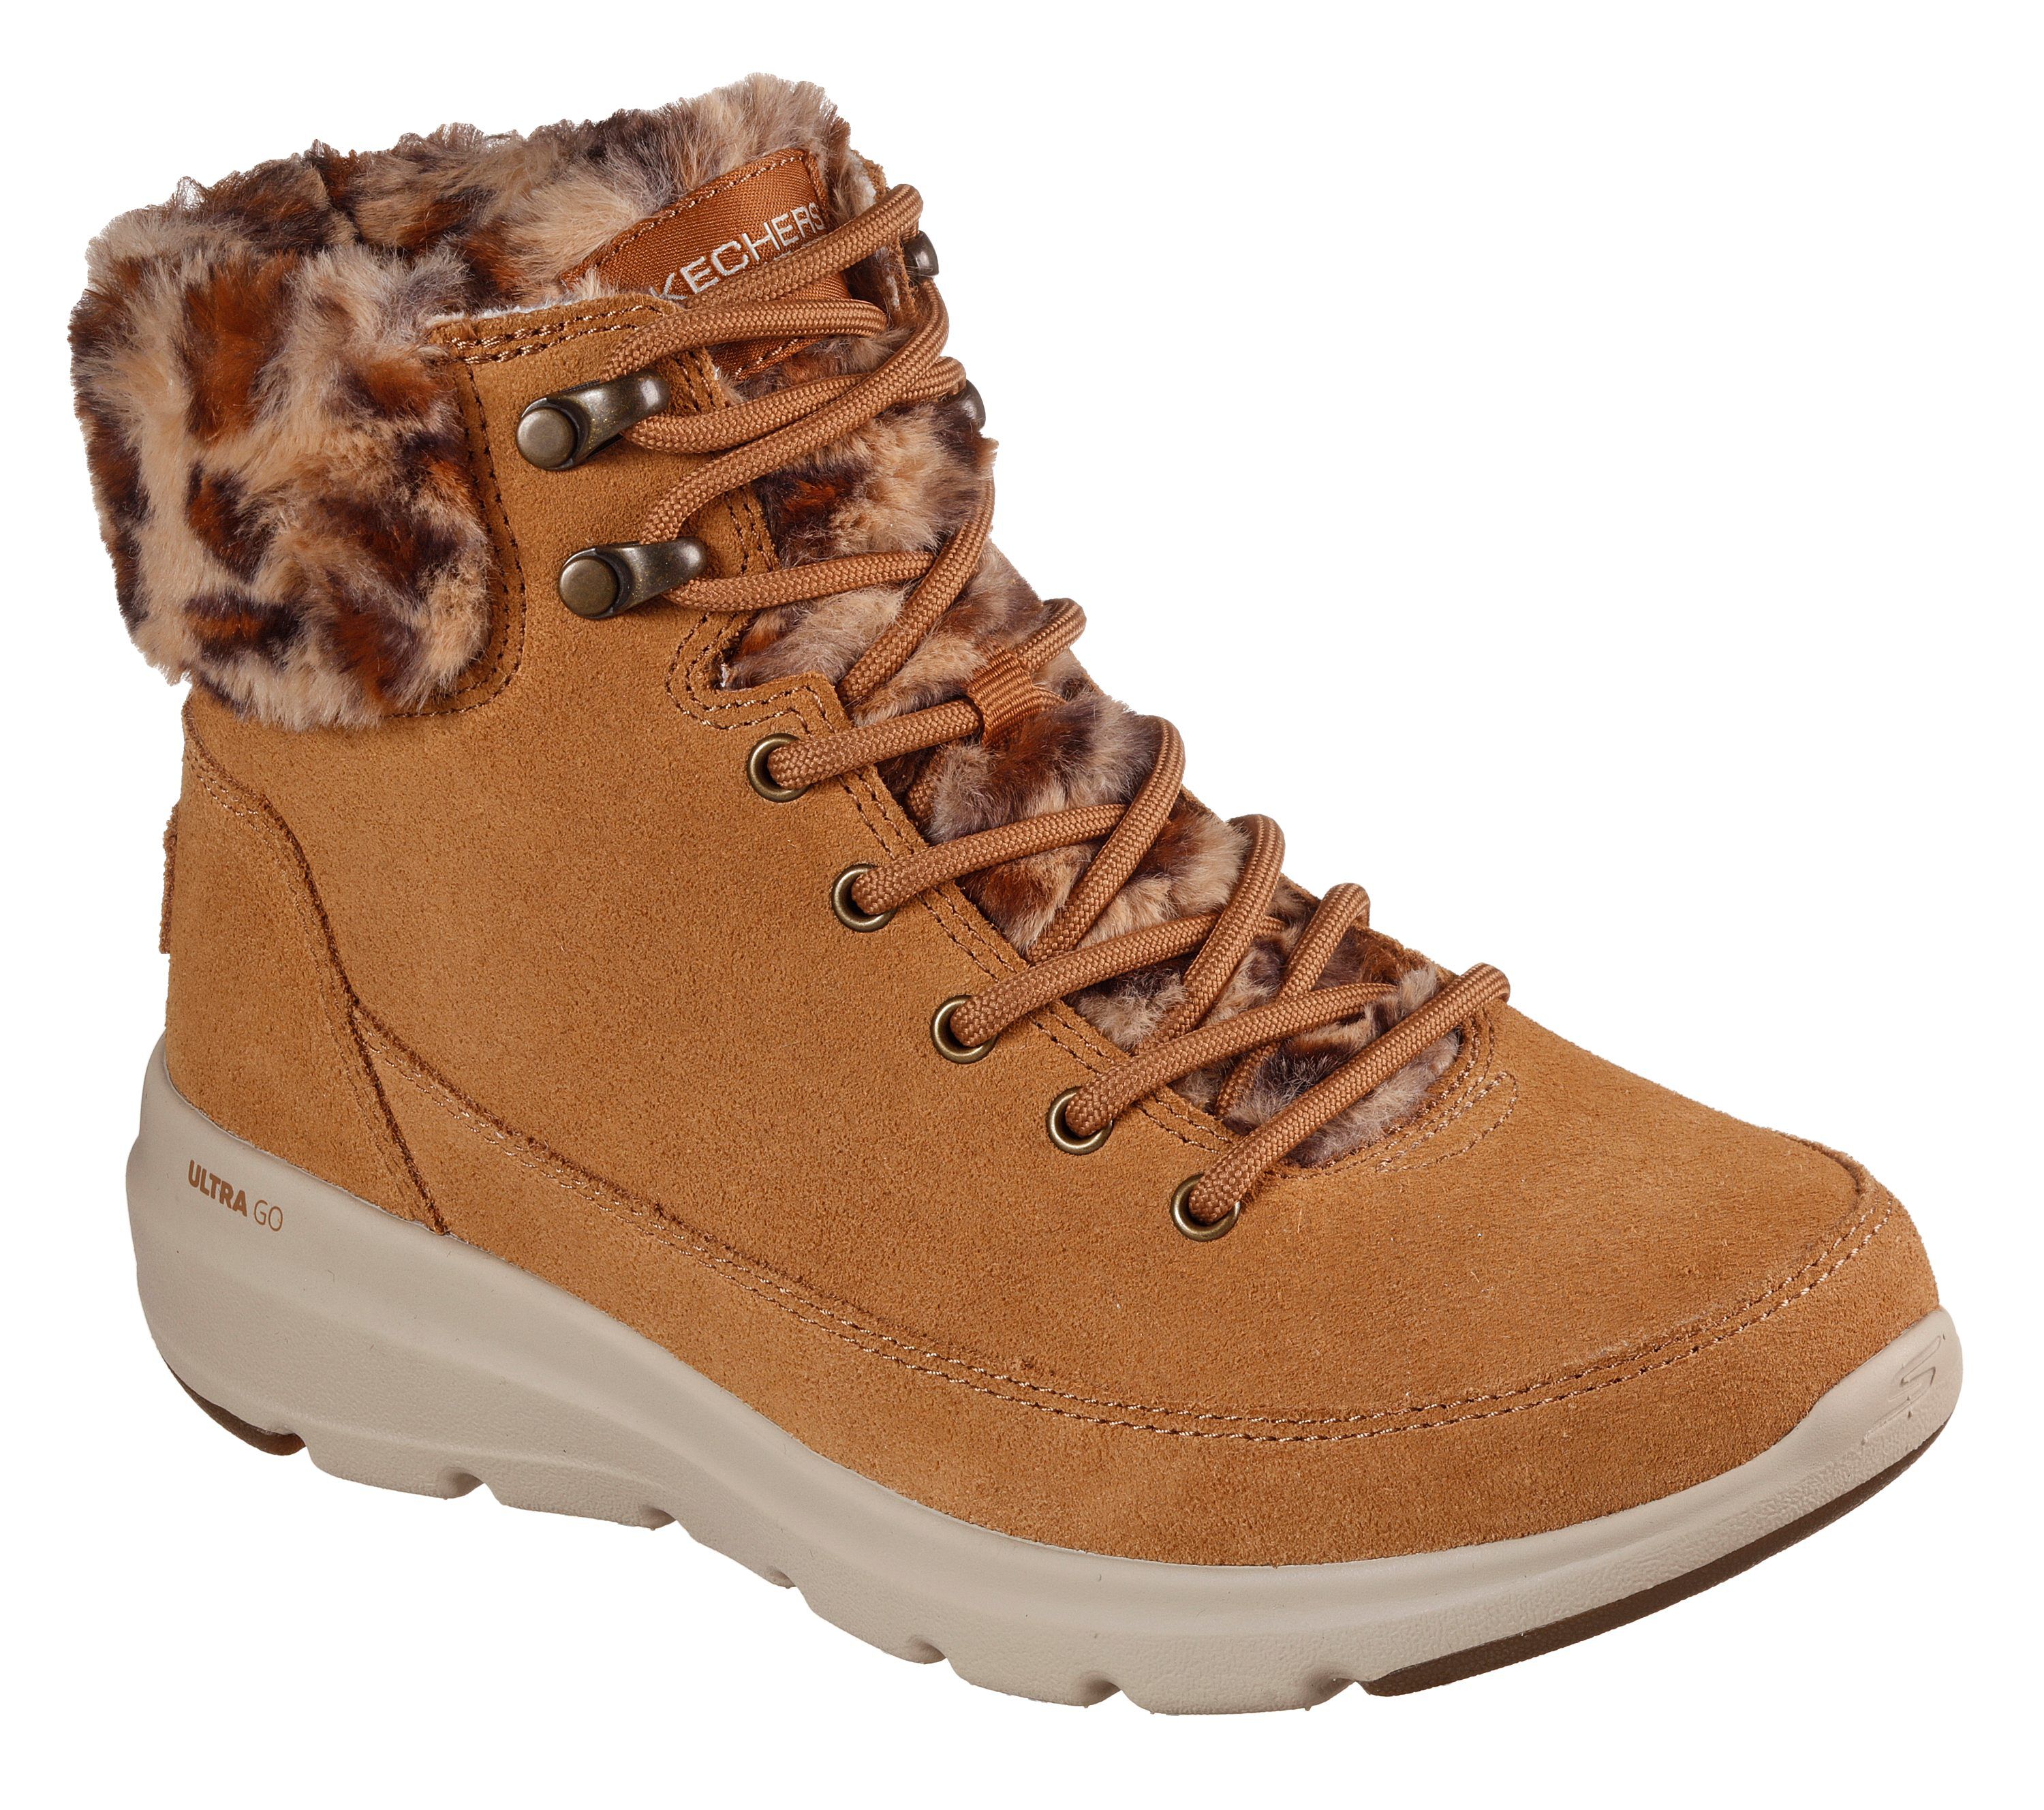 skechers women's winter boots canada